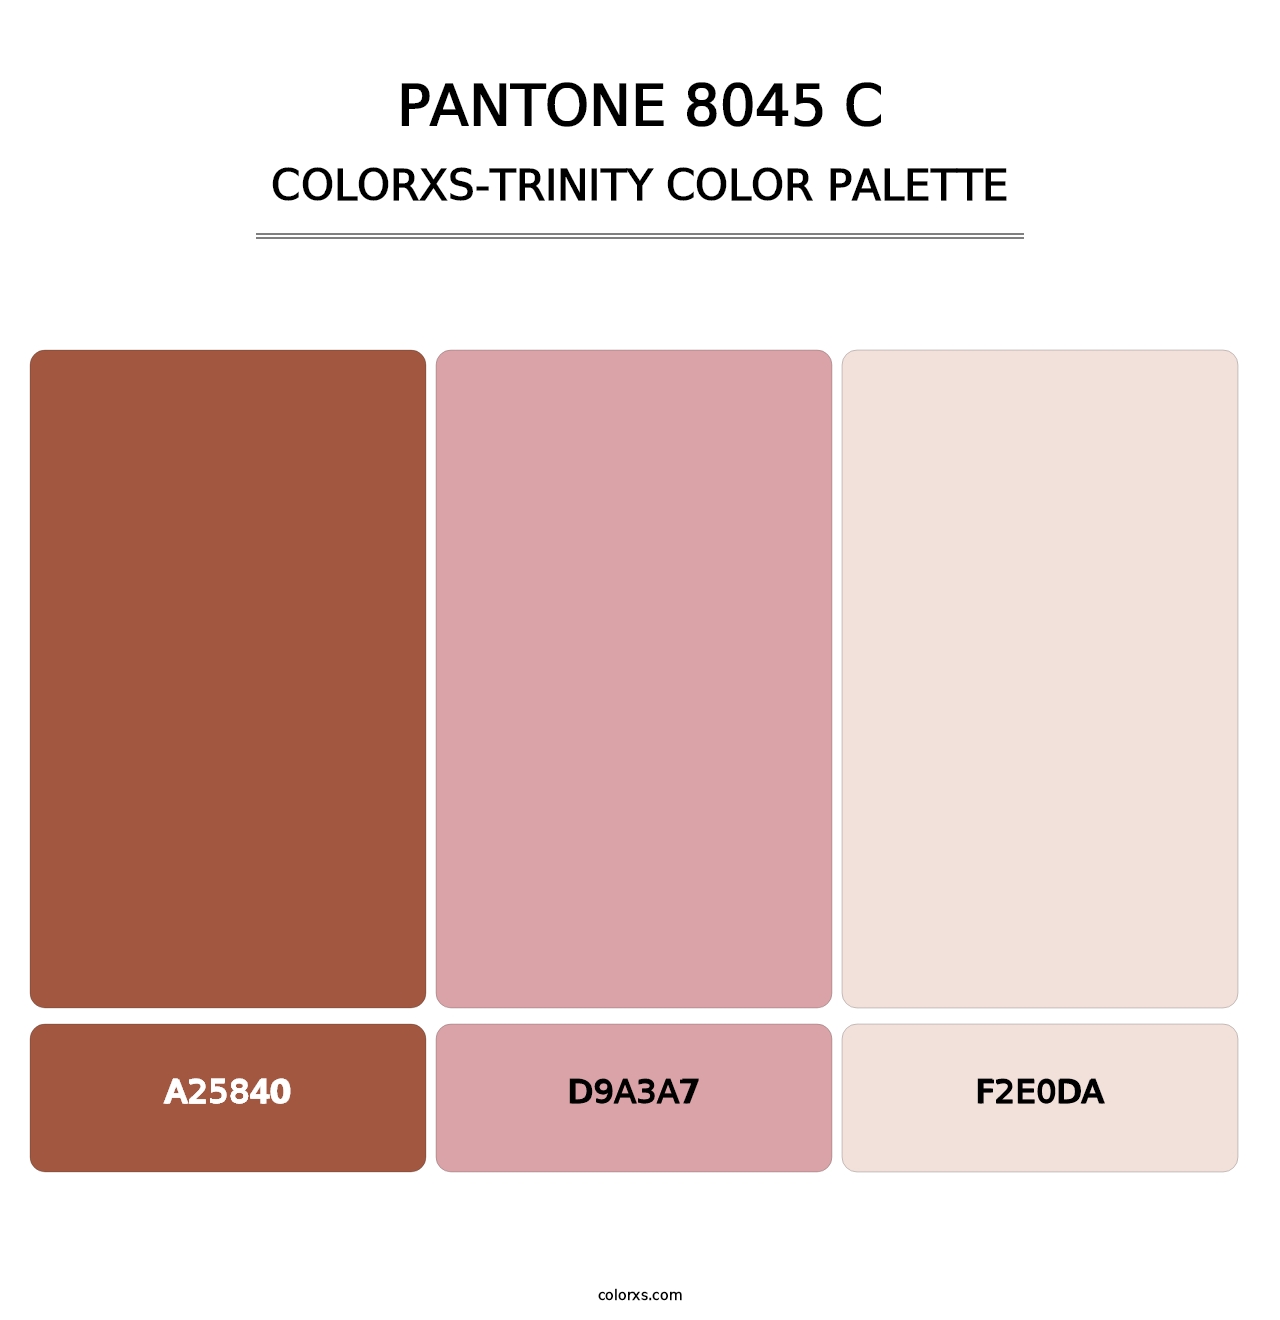 PANTONE 8045 C - Colorxs Trinity Palette